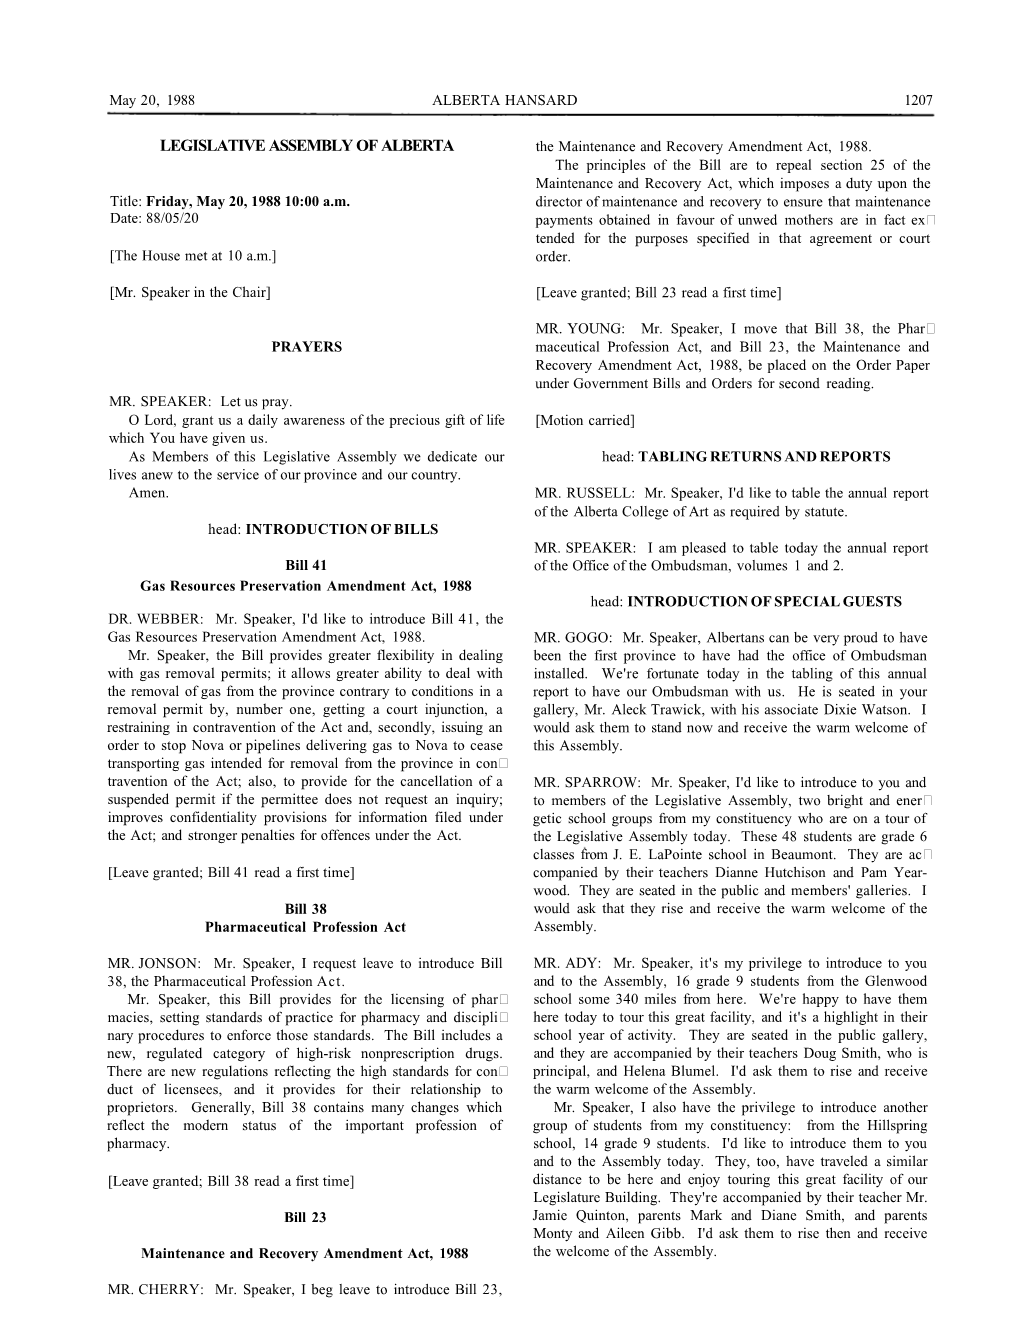 LEGISLATIVE ASSEMBLY of ALBERTA the Maintenance and Recovery Amendment Act, 1988